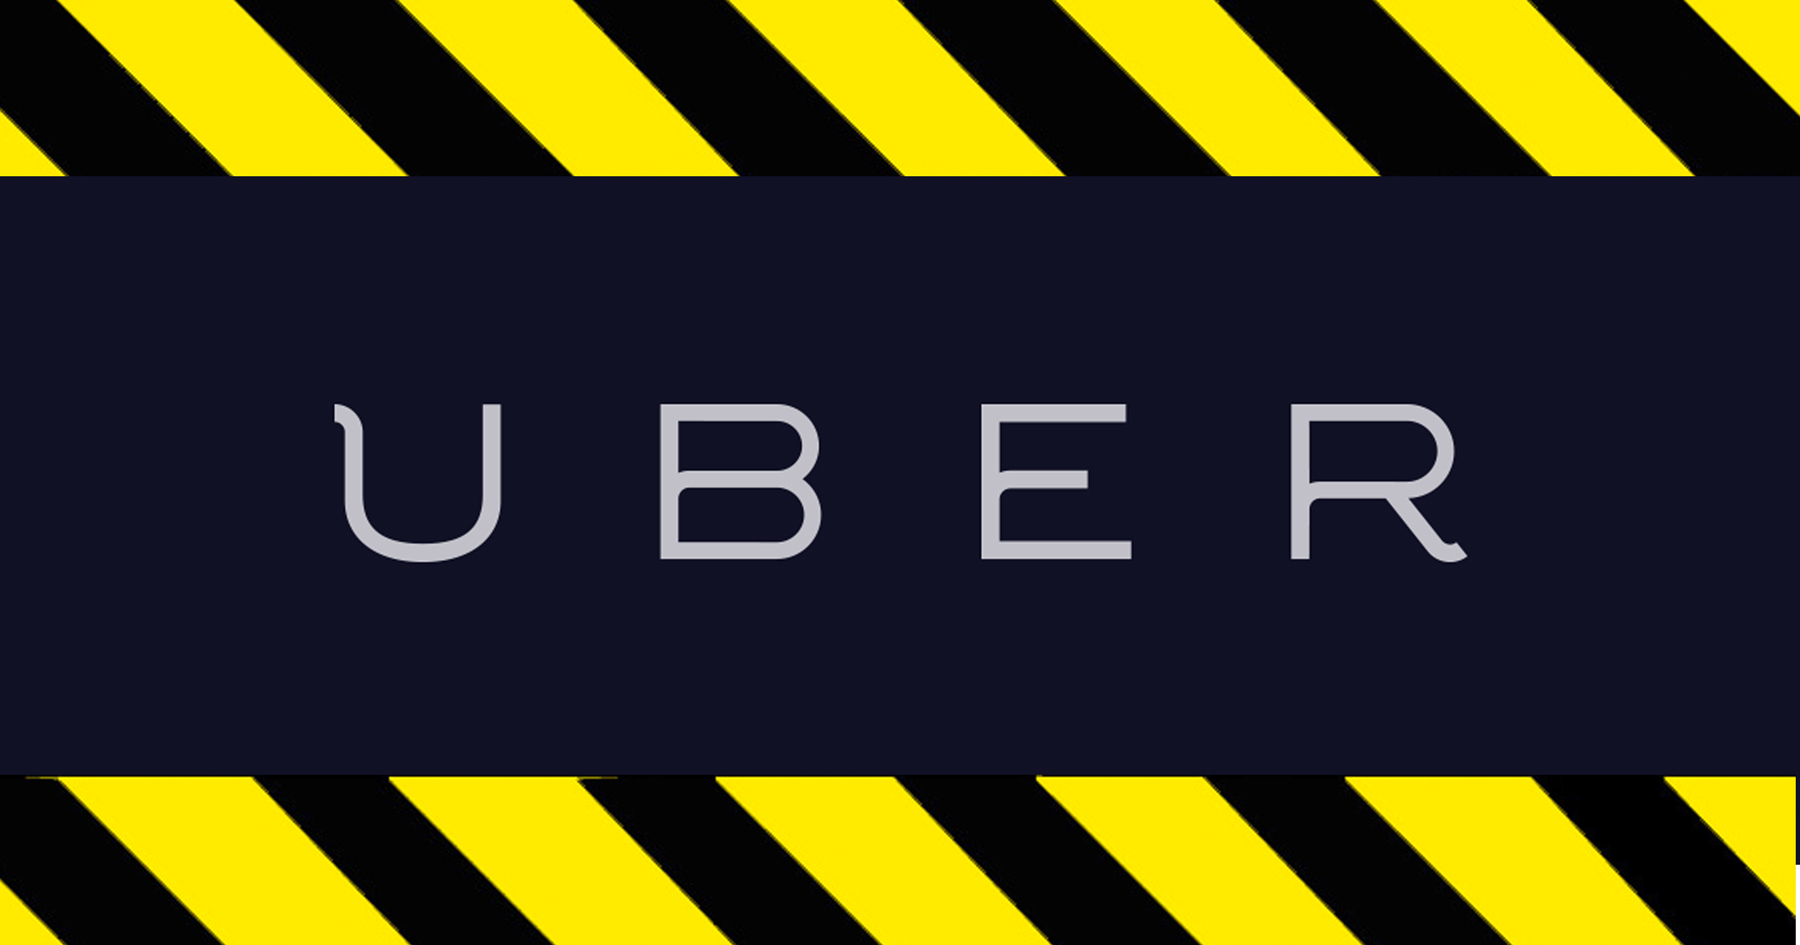 Uber, car, ride, London, taxi, regulation, waiting, Paul Jacob, Common Sense